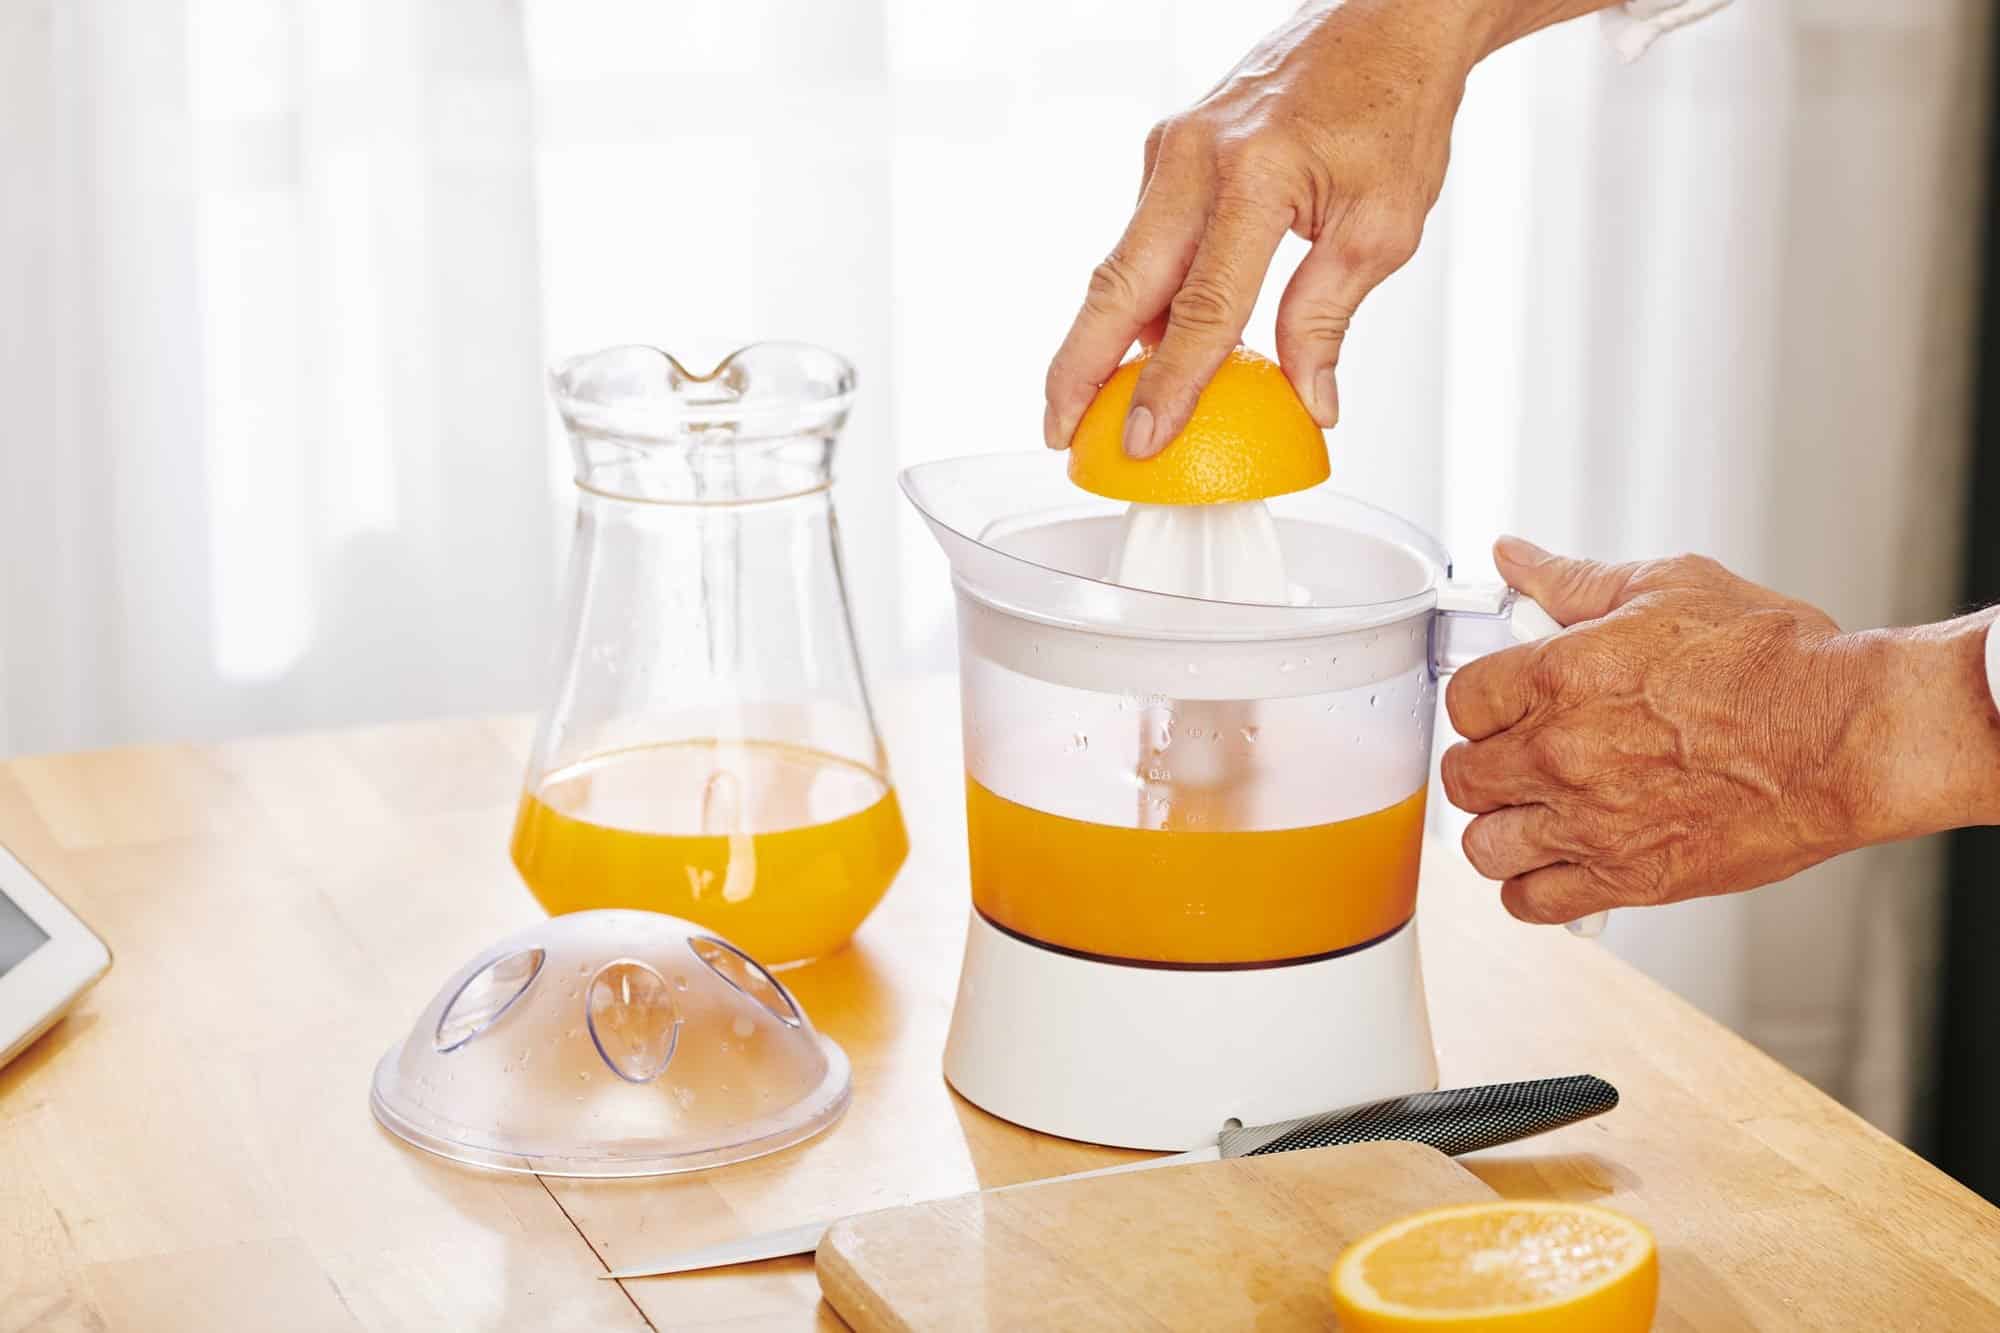 orange juice making machine